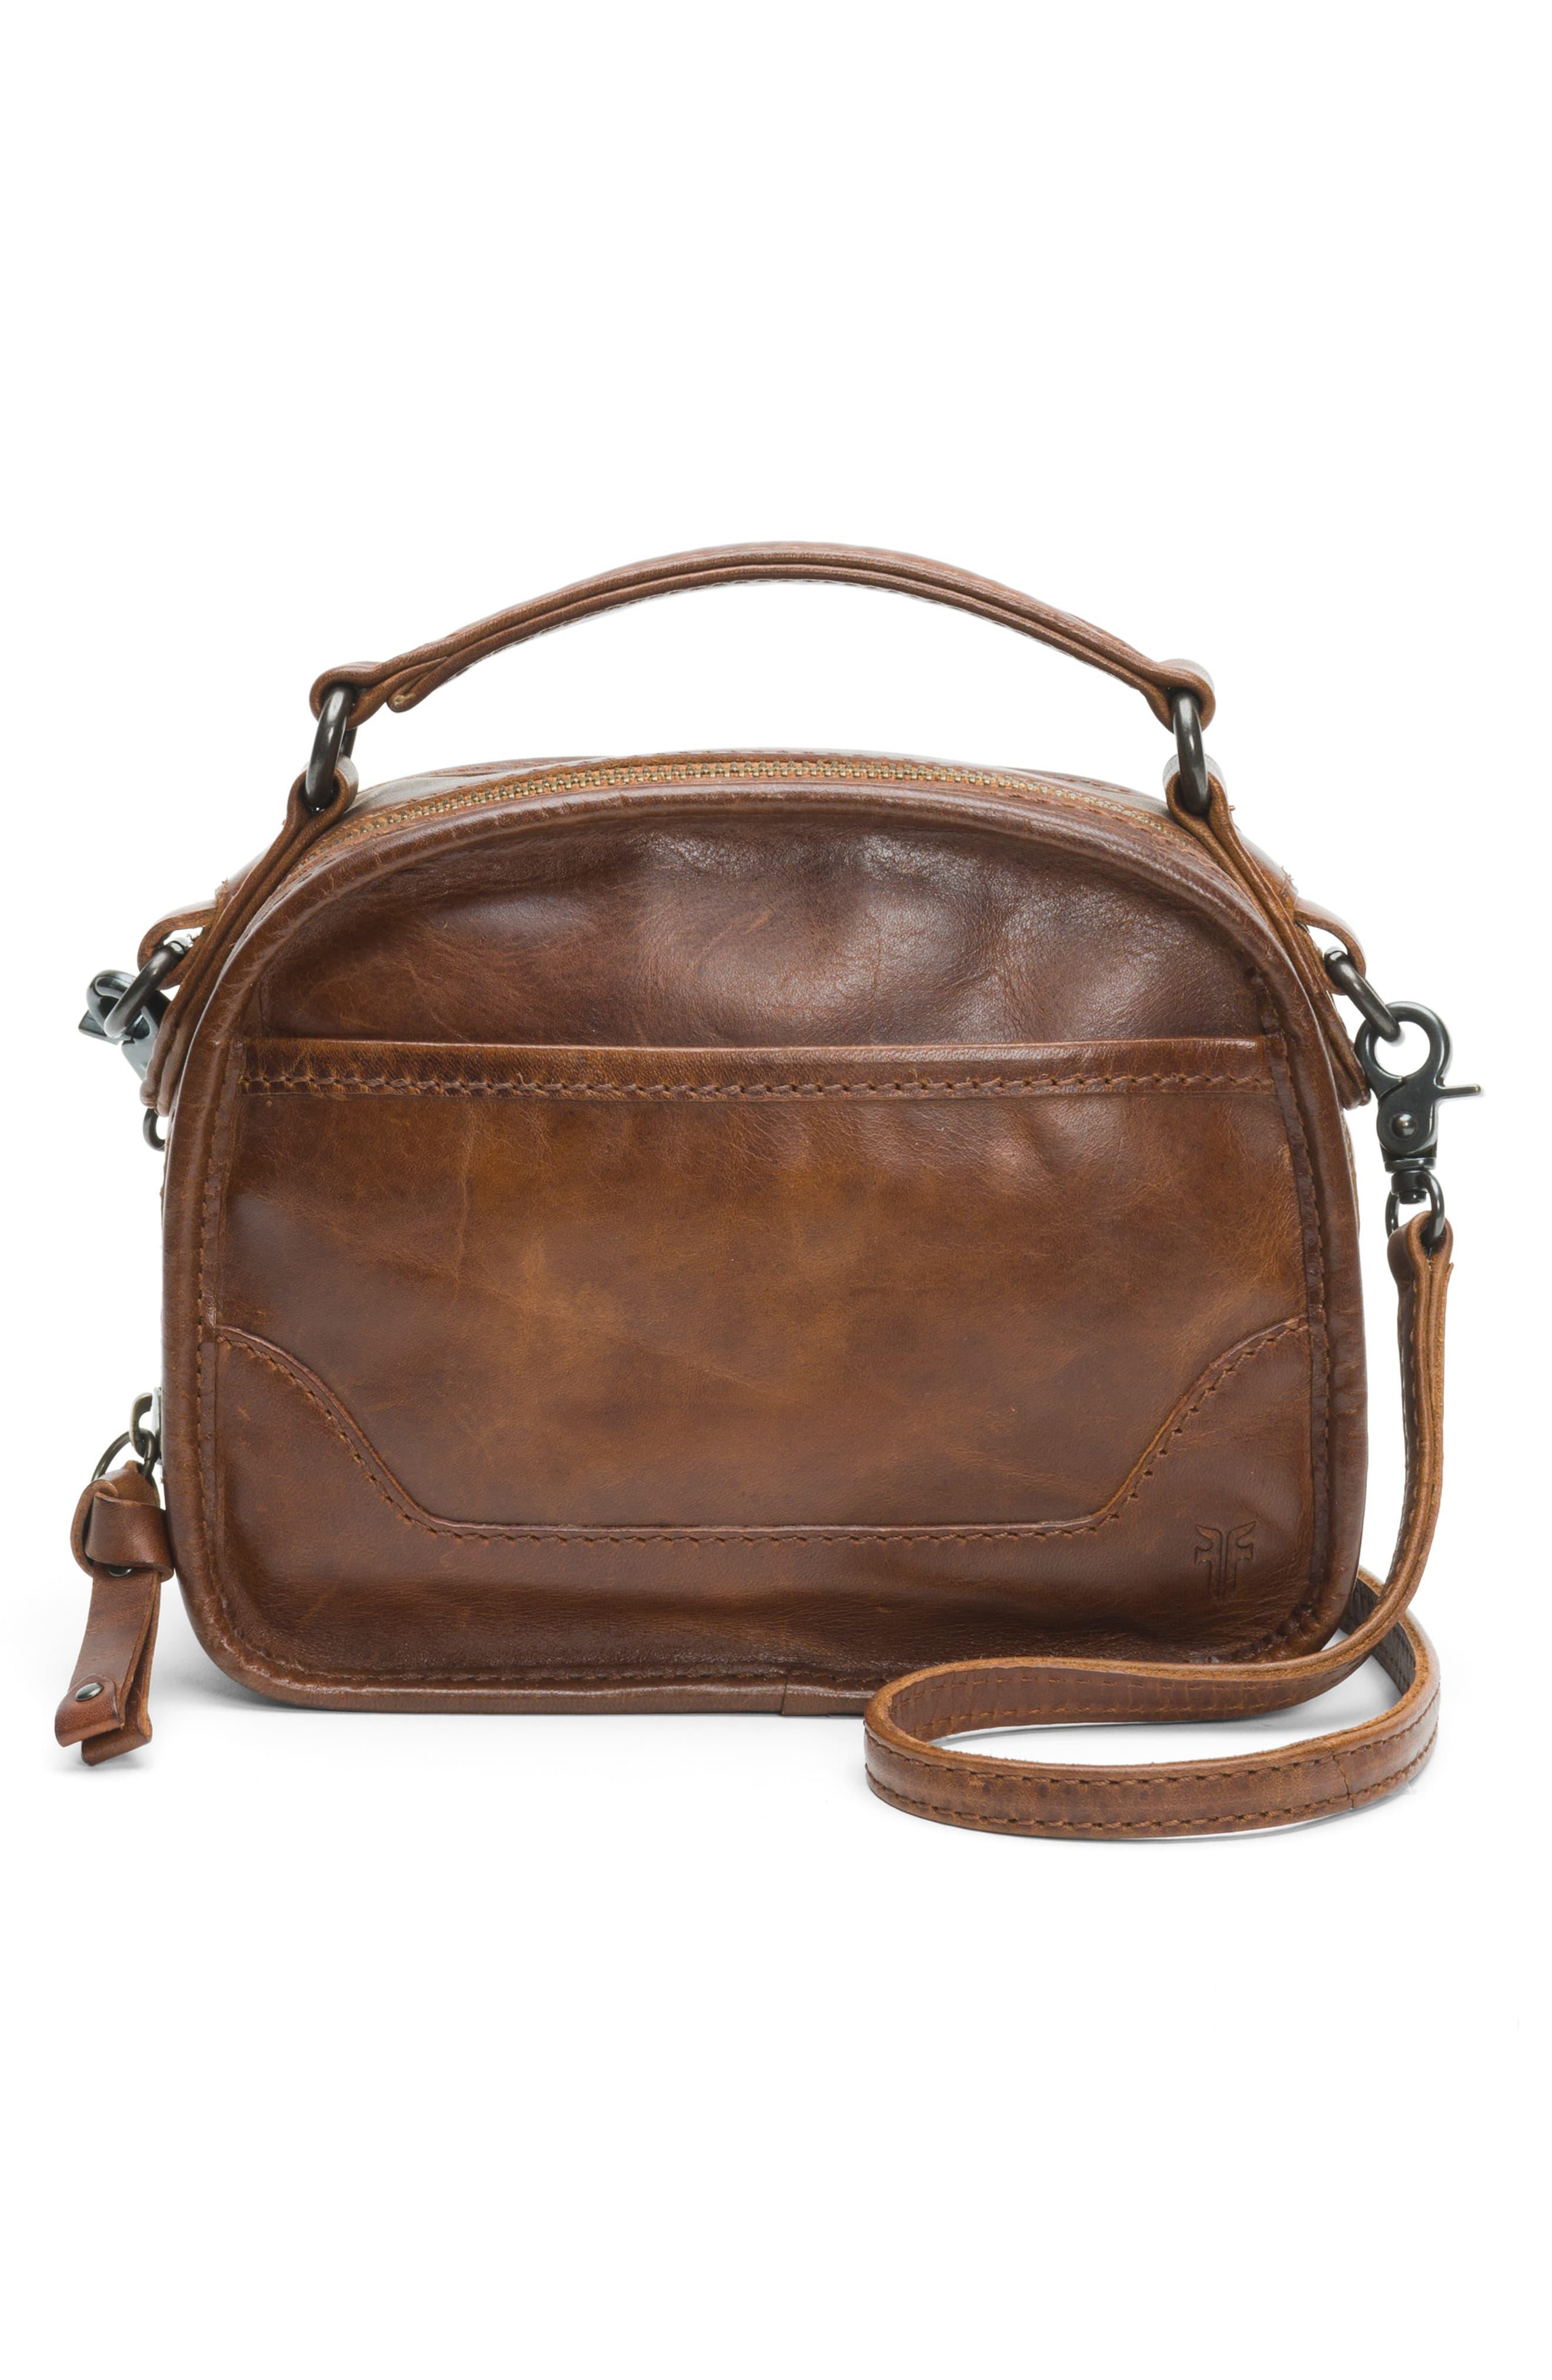 Frye Melissa Leather Crossbody Bag in Cognac (Brown) - Lyst